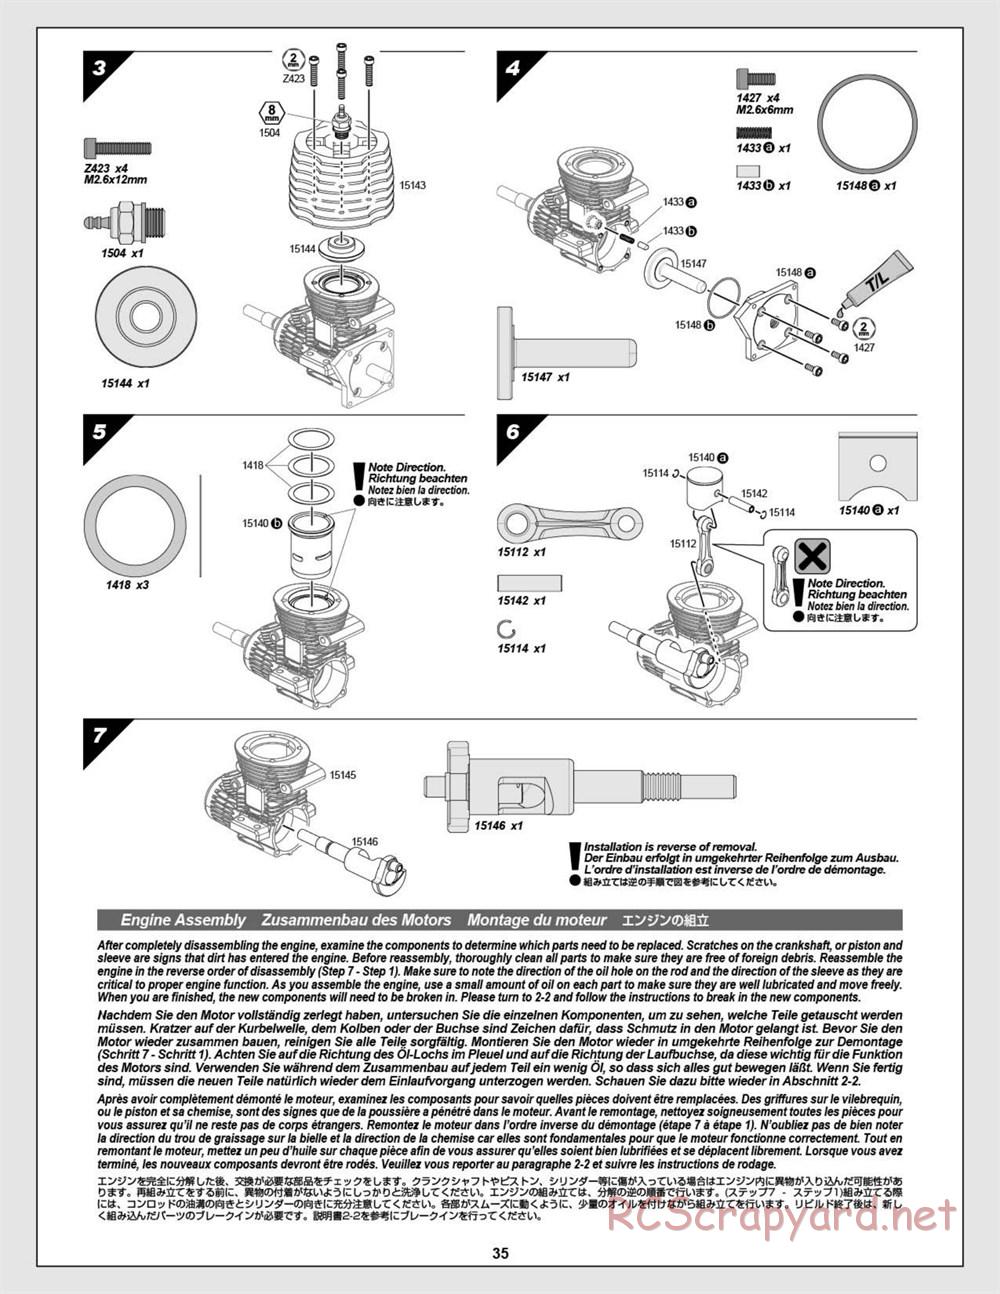 HPI - Nitro RS4 3 Drift - Manual - Page 35